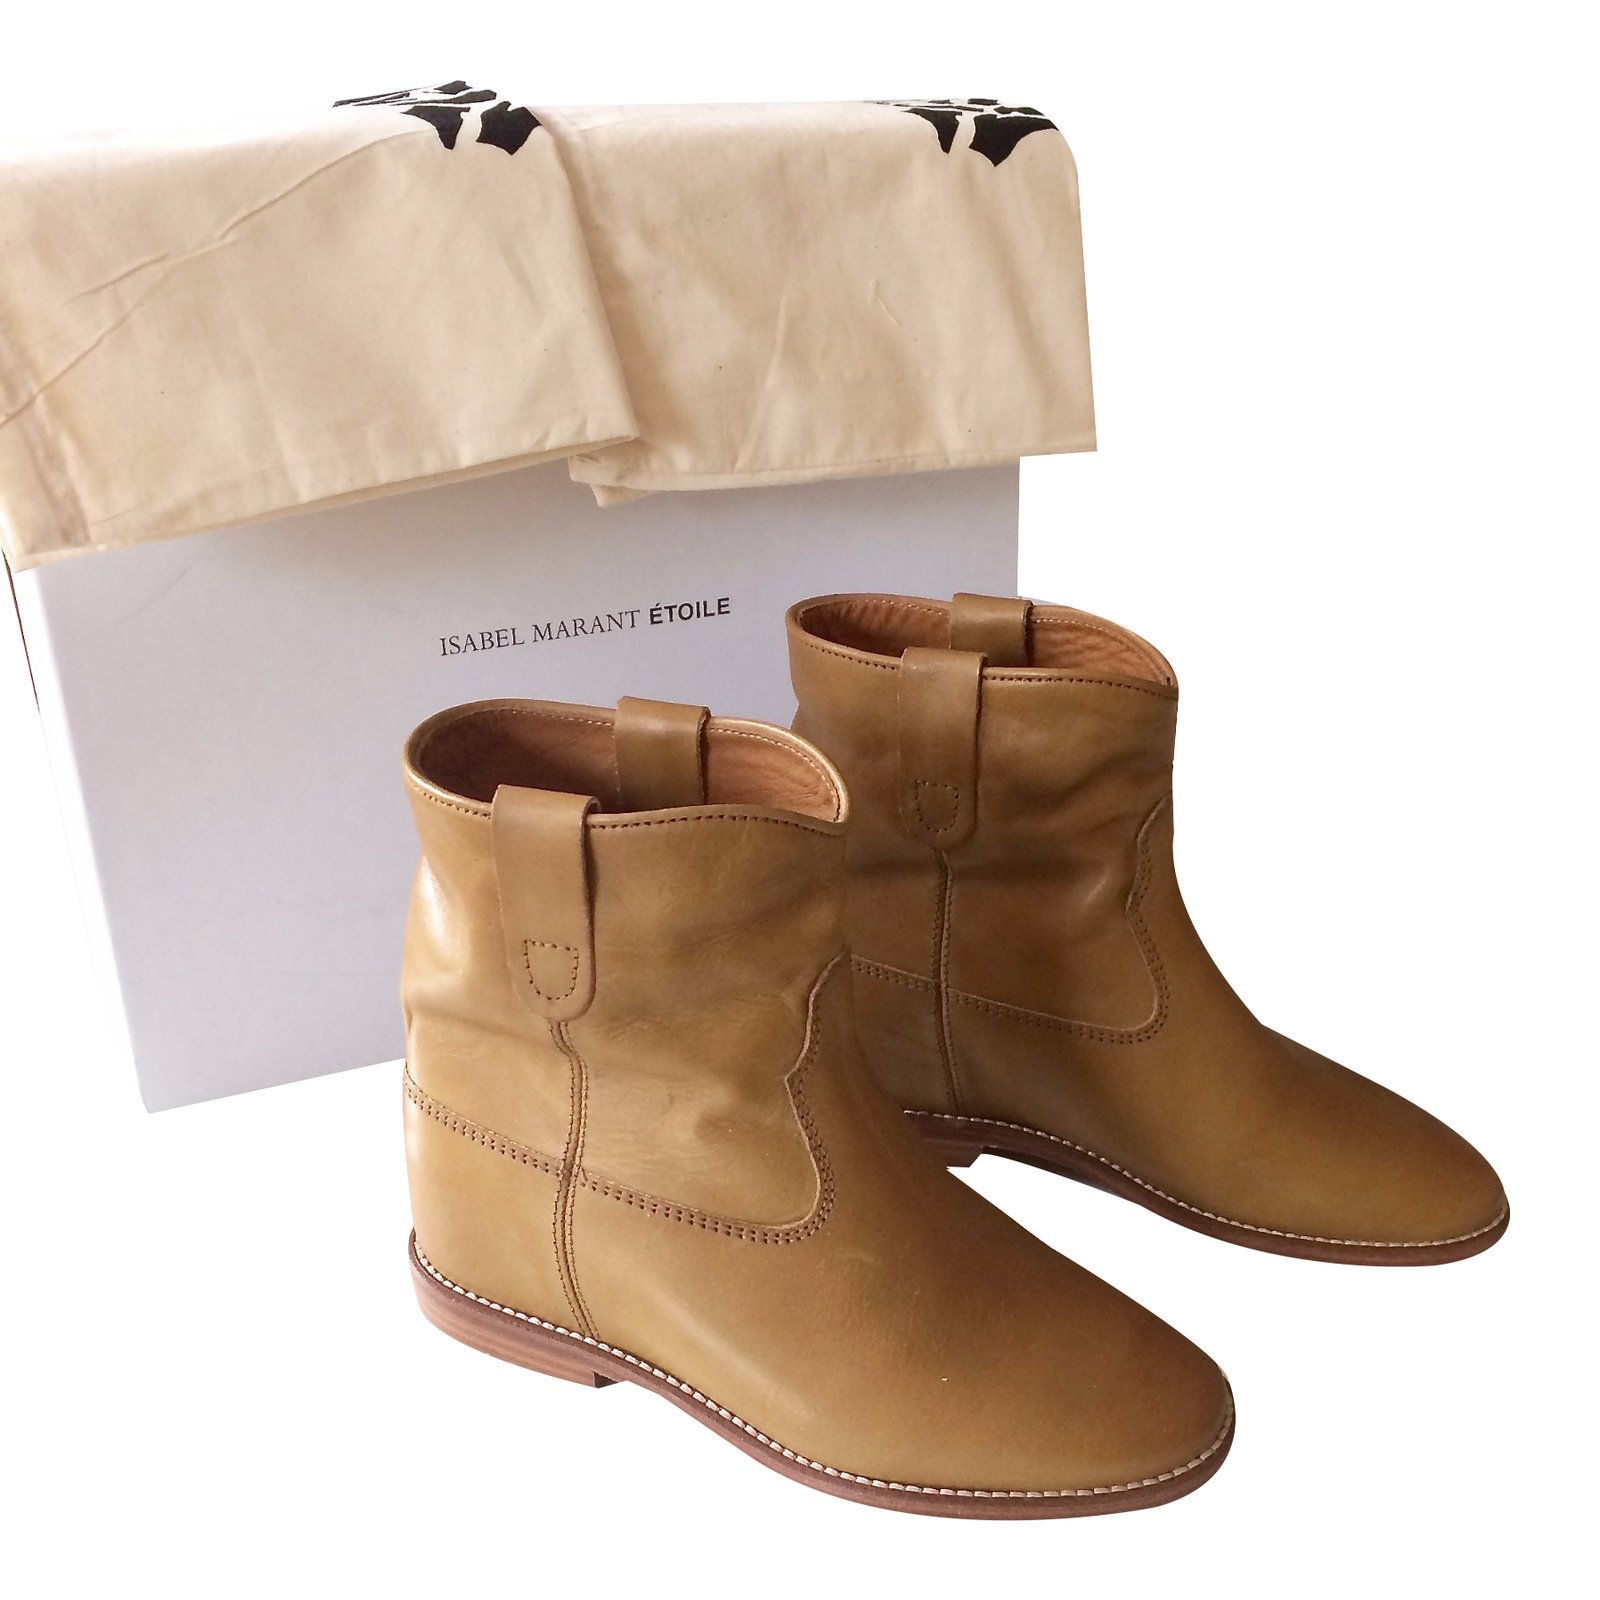 Isabel Marant Etoile boots Cluster 